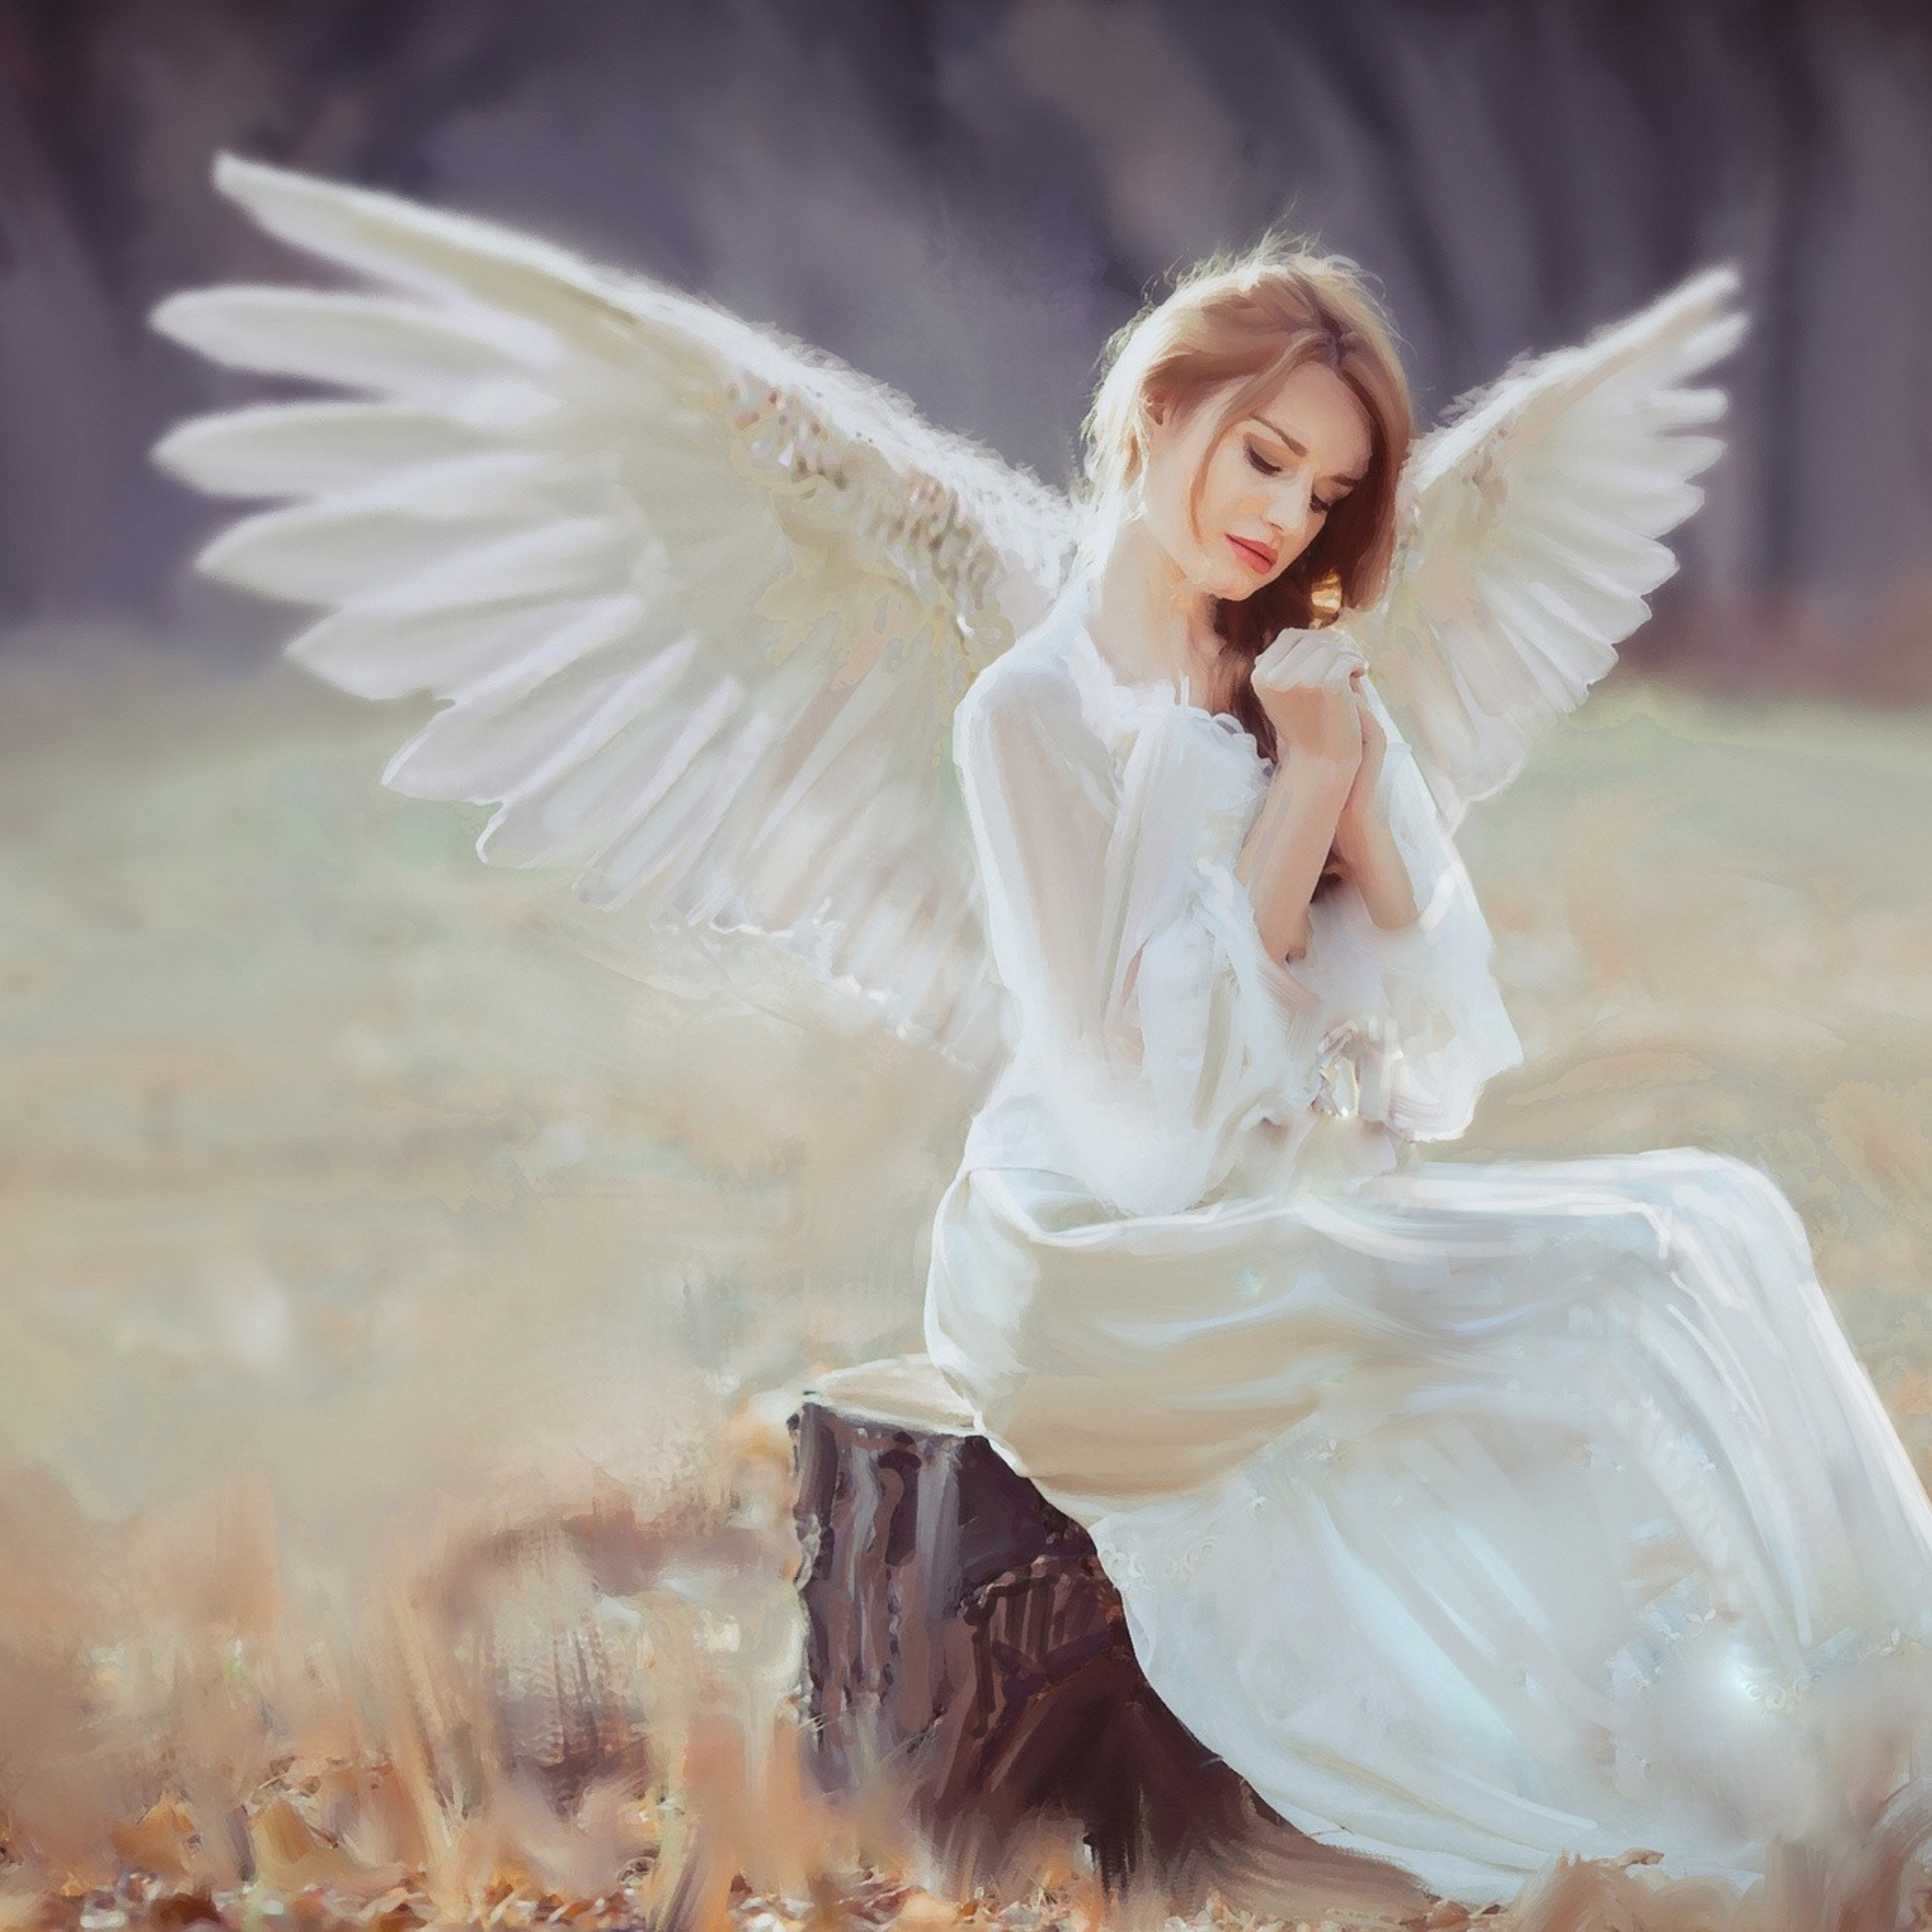 Angels women. Angels Lullaby Хелена. Девушка с крыльями. Девушка - ангел. Дева-ангел.